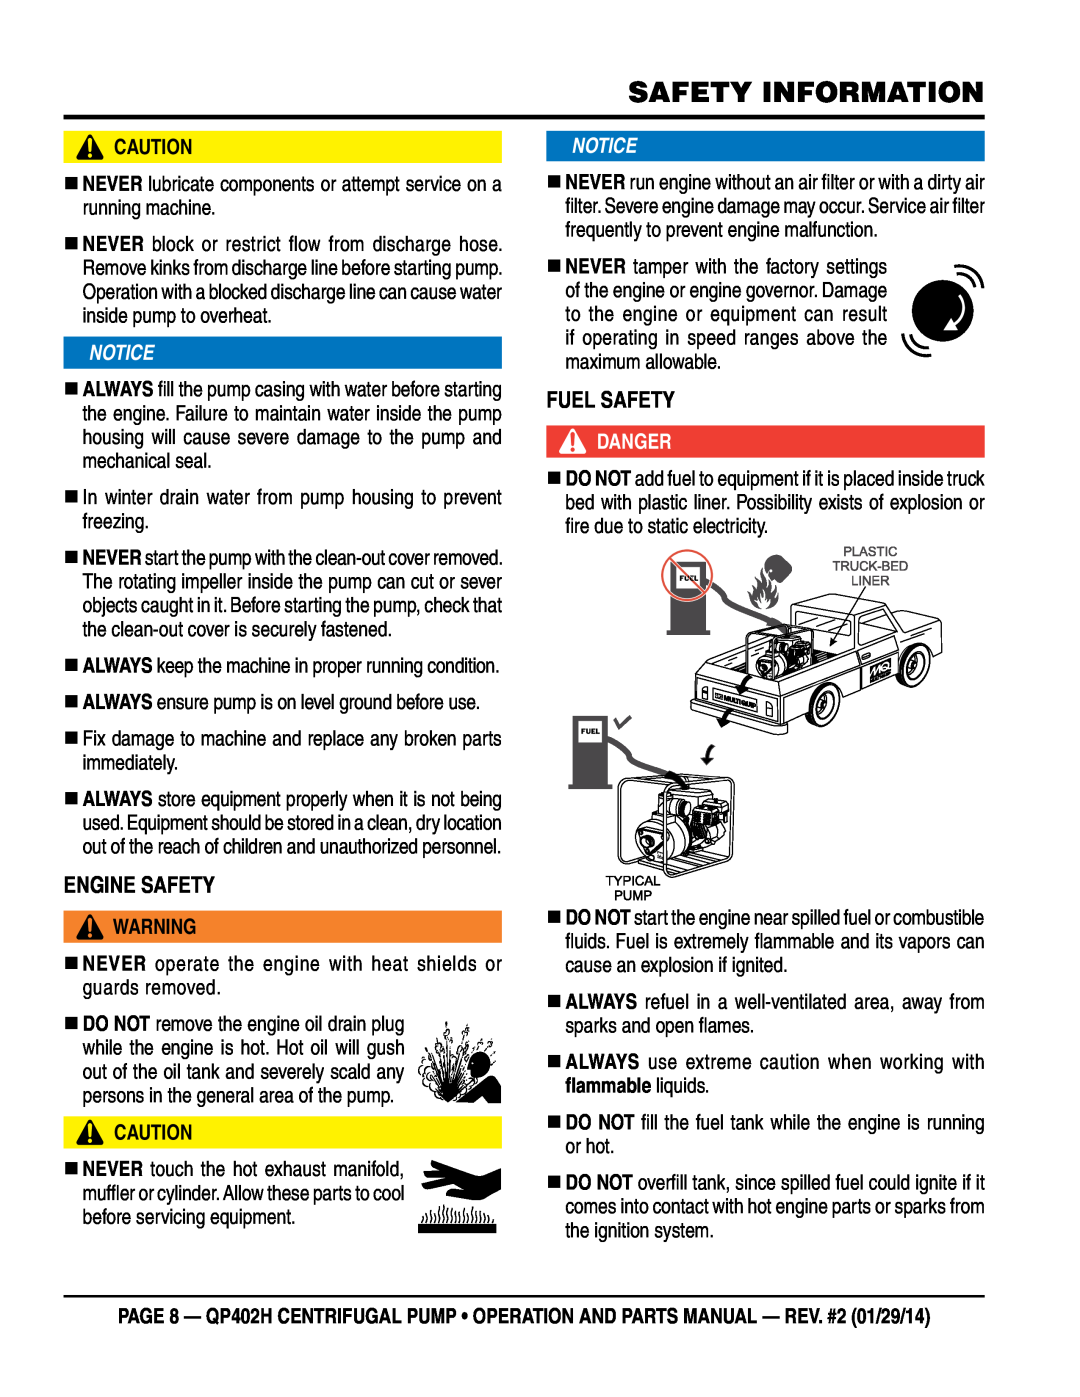 Multiquip qp402h manual Engine Safety, Fuel Safety, Safety Information, Danger 